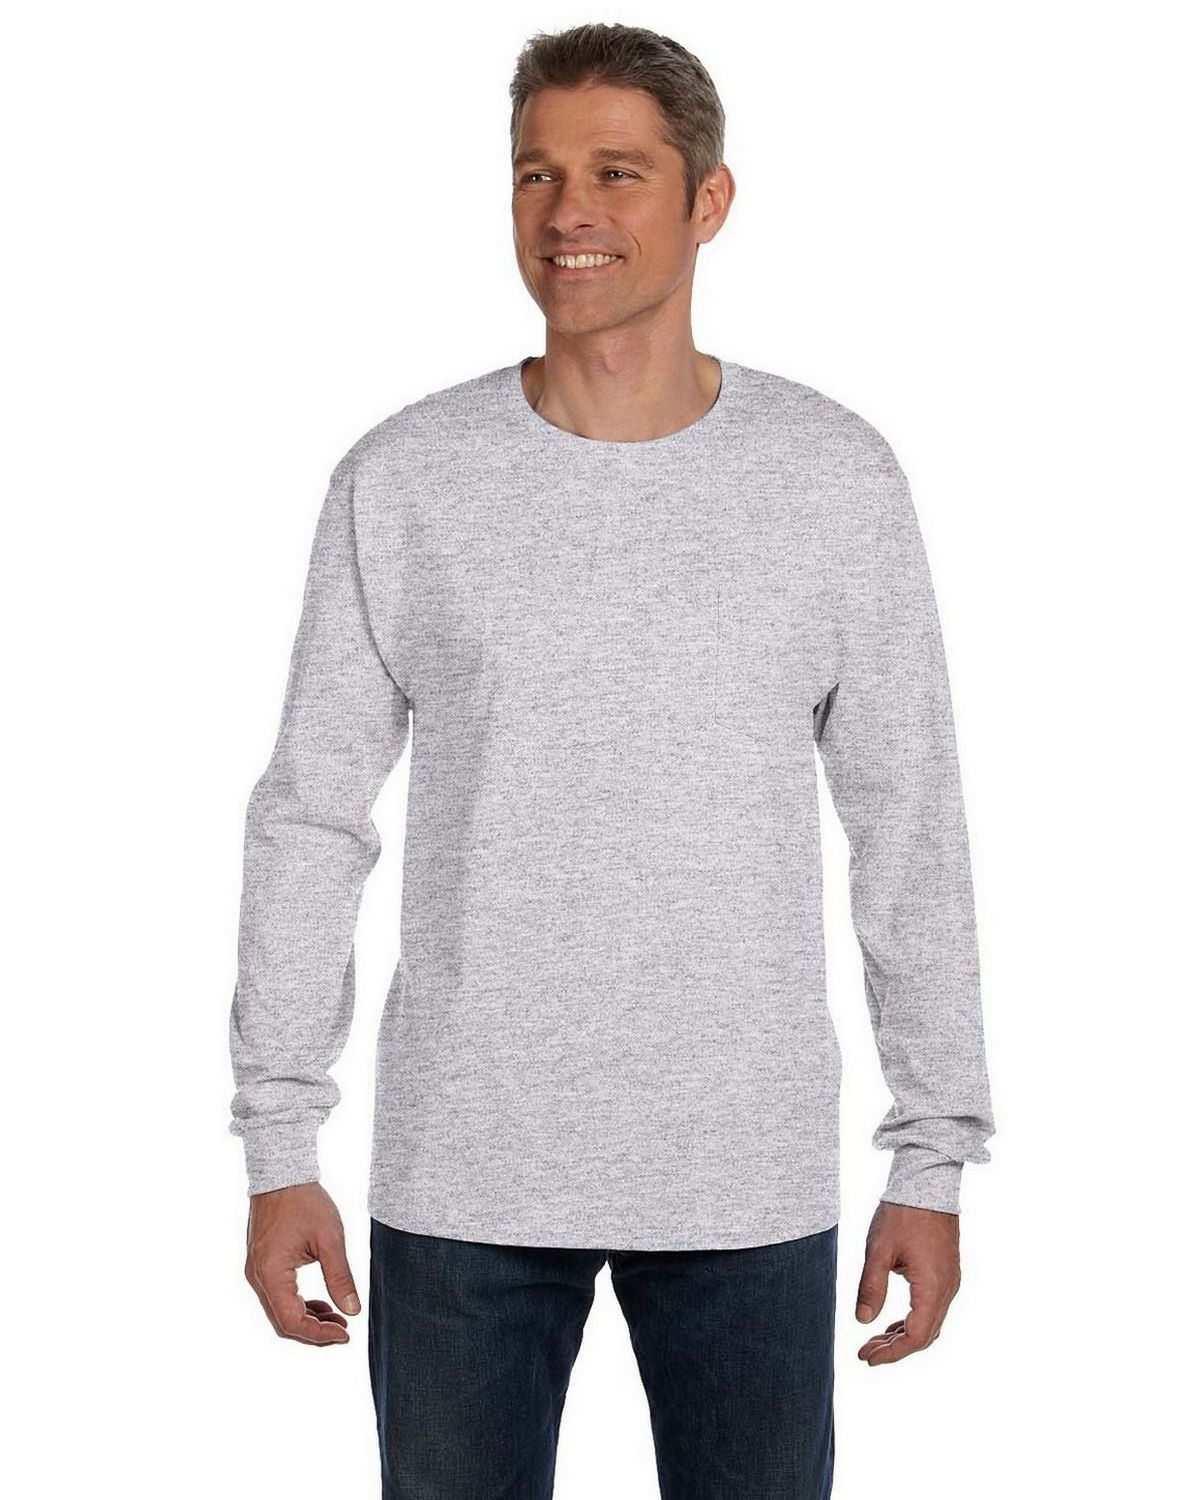 Hanes 5596 Tagless Long Sleeve Pocket T Shirt - ApparelnBags.com